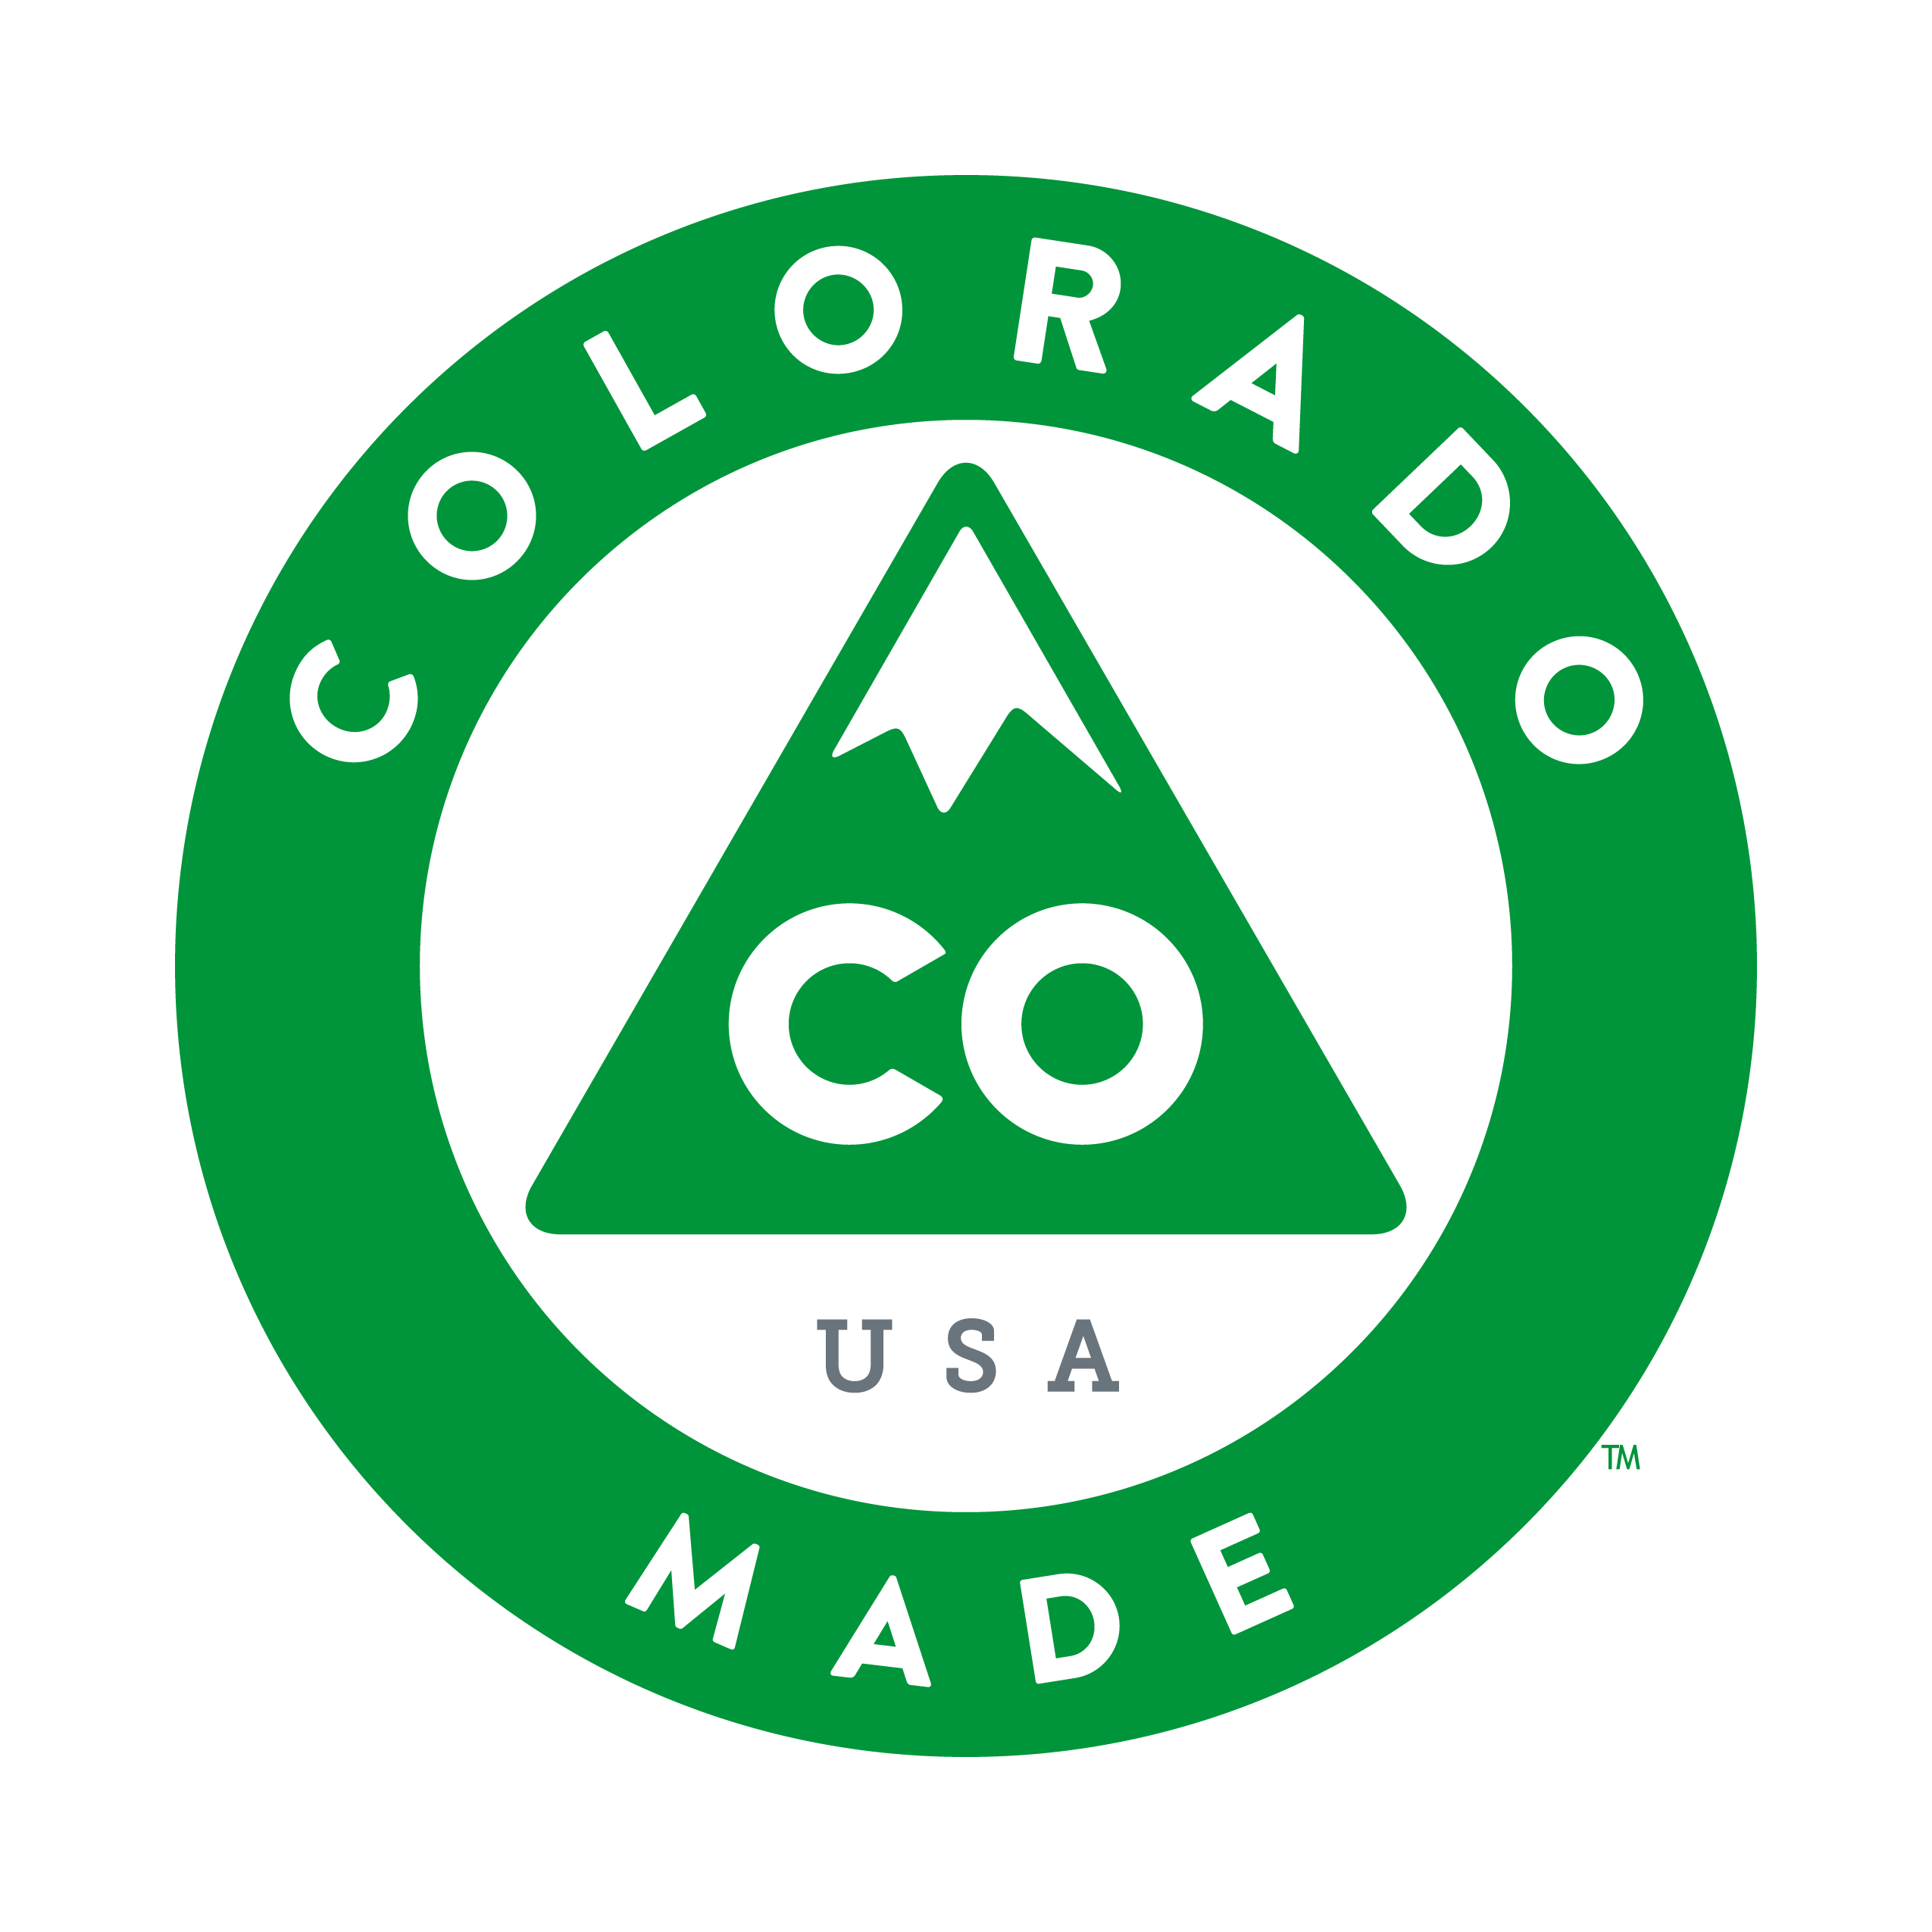 Tall Guns non-NRA programs are all made in Colorado by a Colorado company